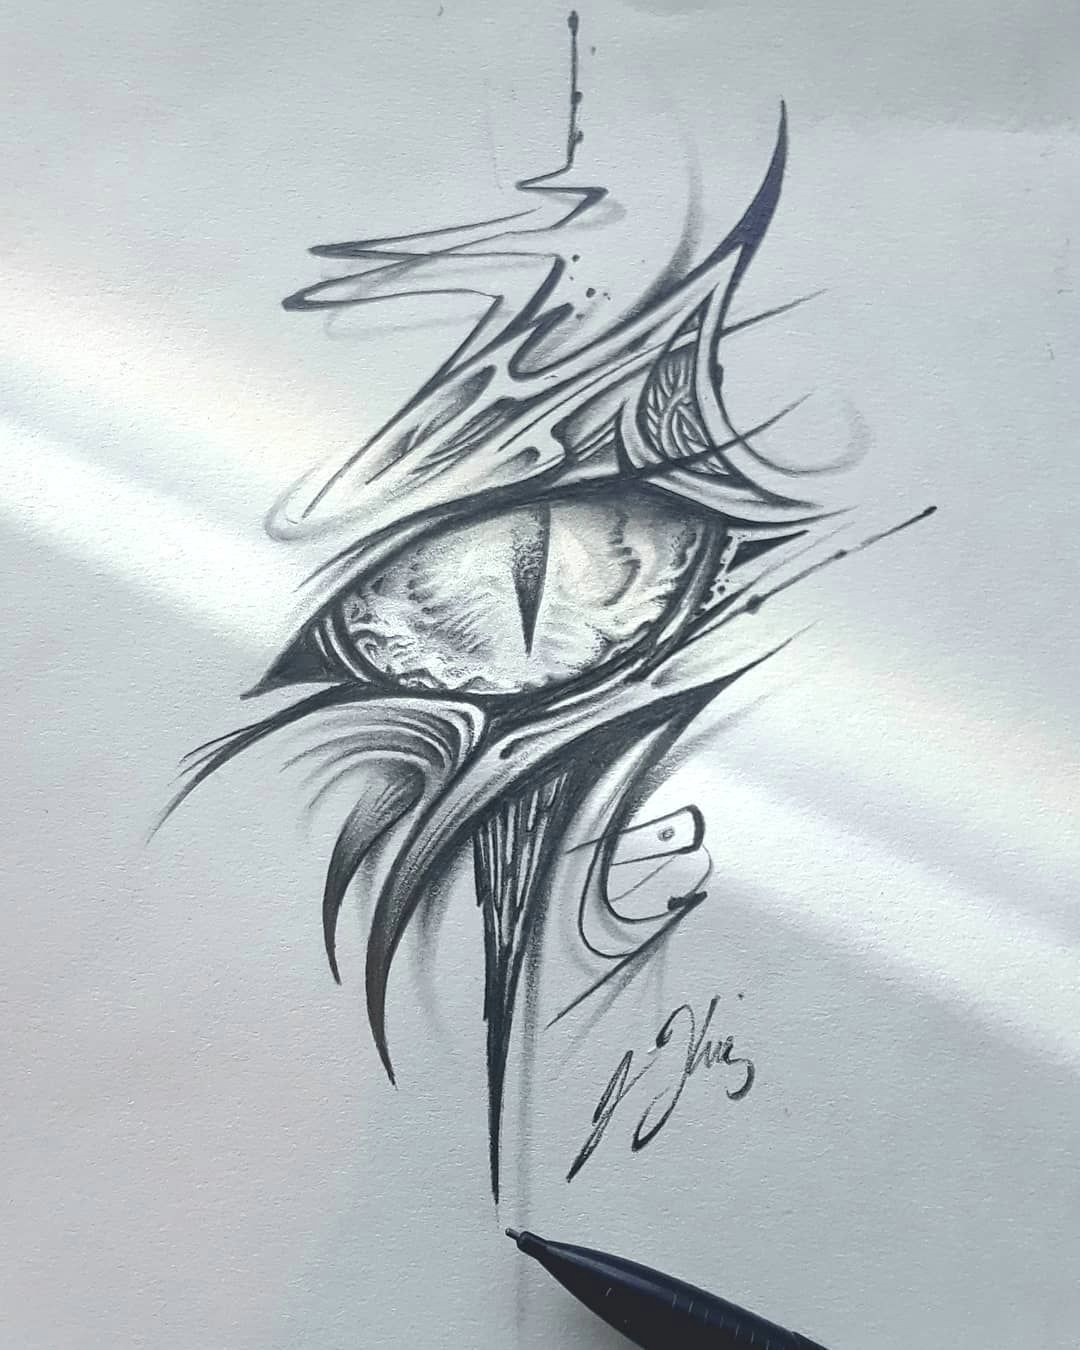 the eye of helios the sun dragon dragon dragoneye tattoo dragoneyetattoo sketch doodle darkart graphicart